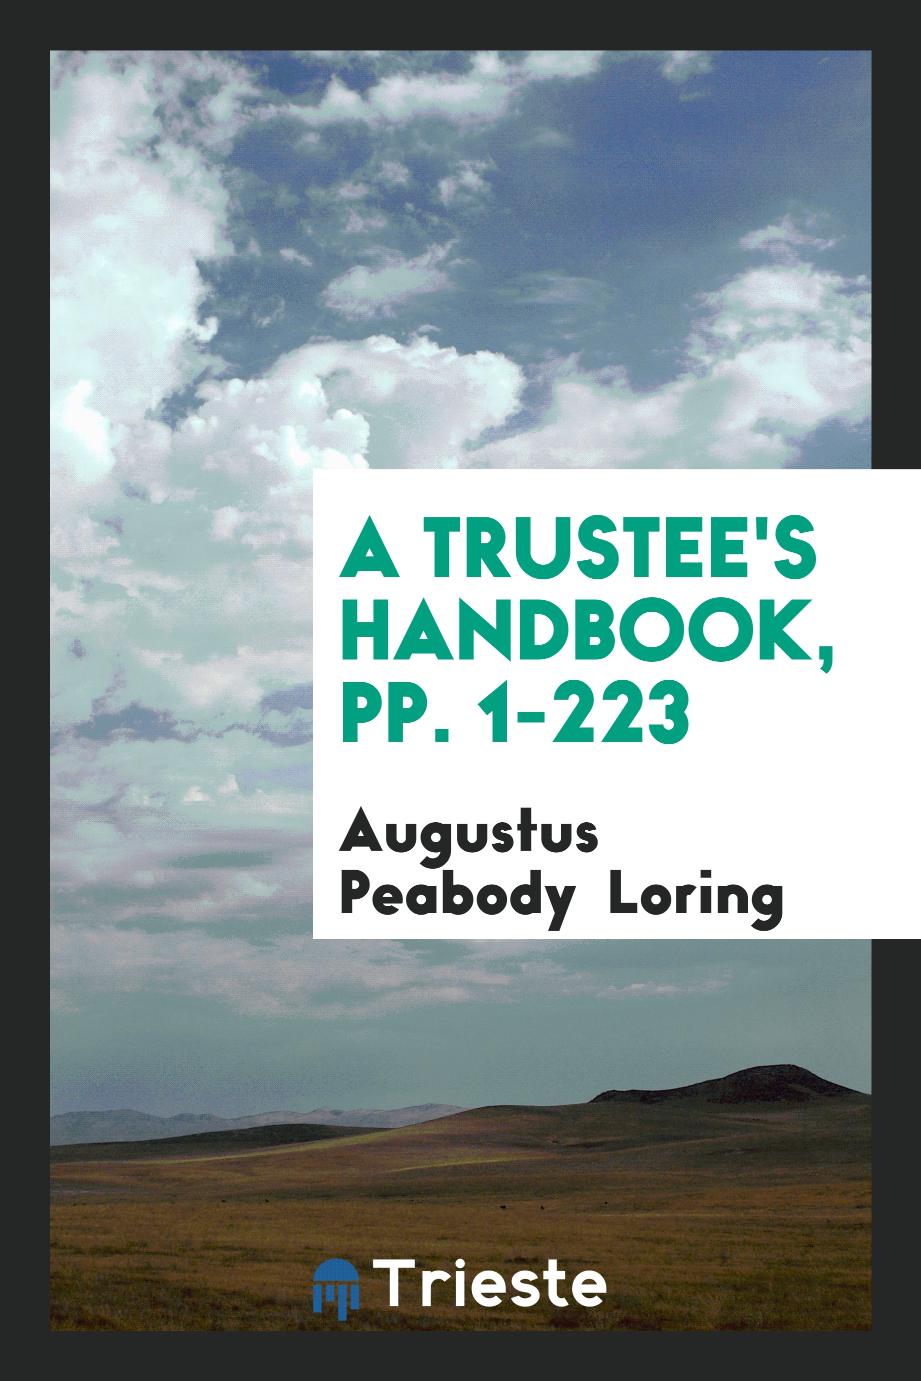 A Trustee's Handbook, pp. 1-223